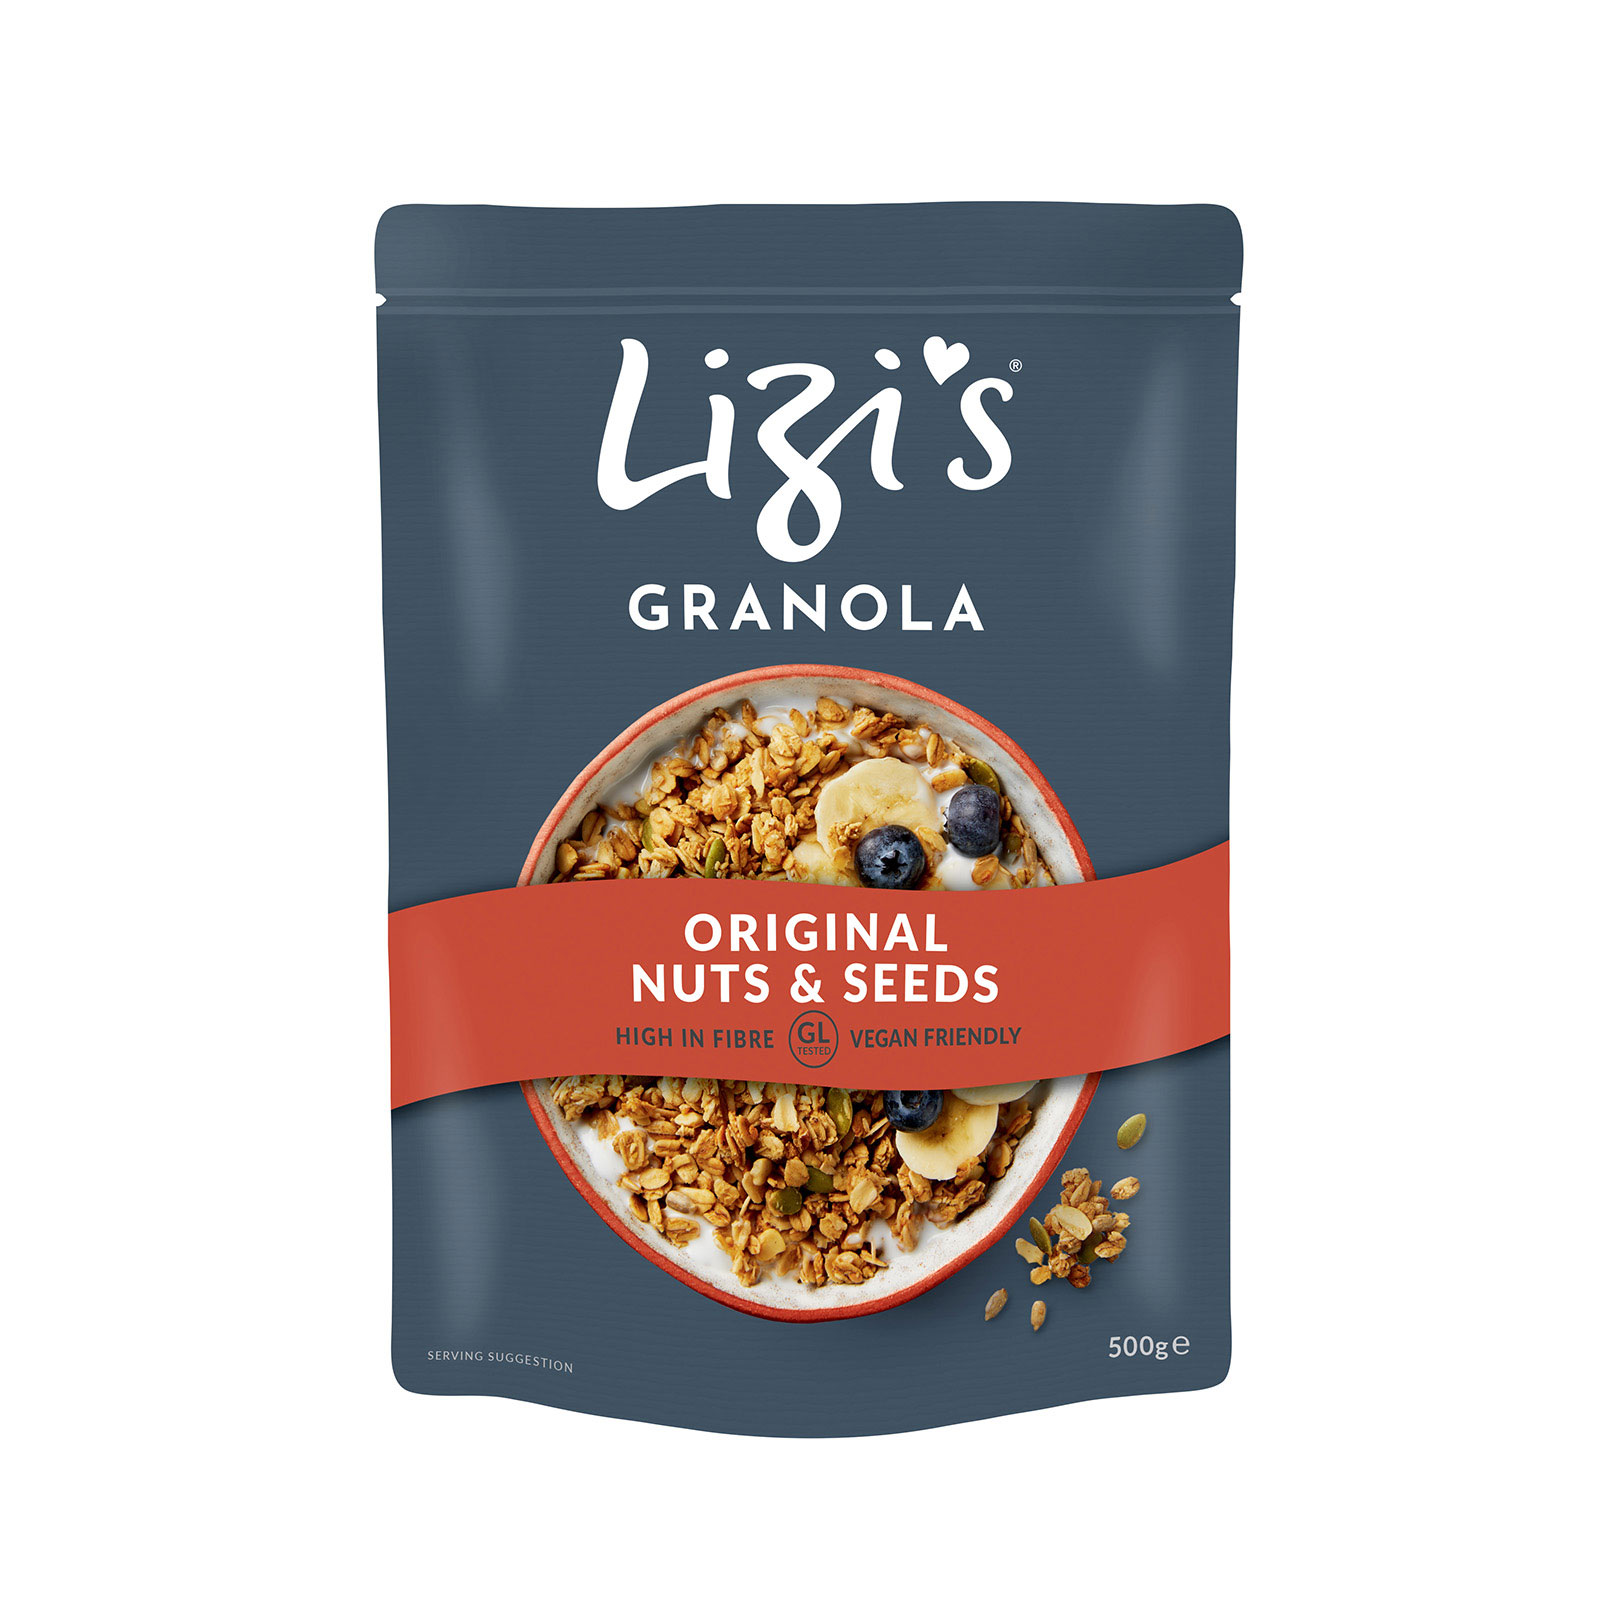 Original Nuts and Seeds Granola